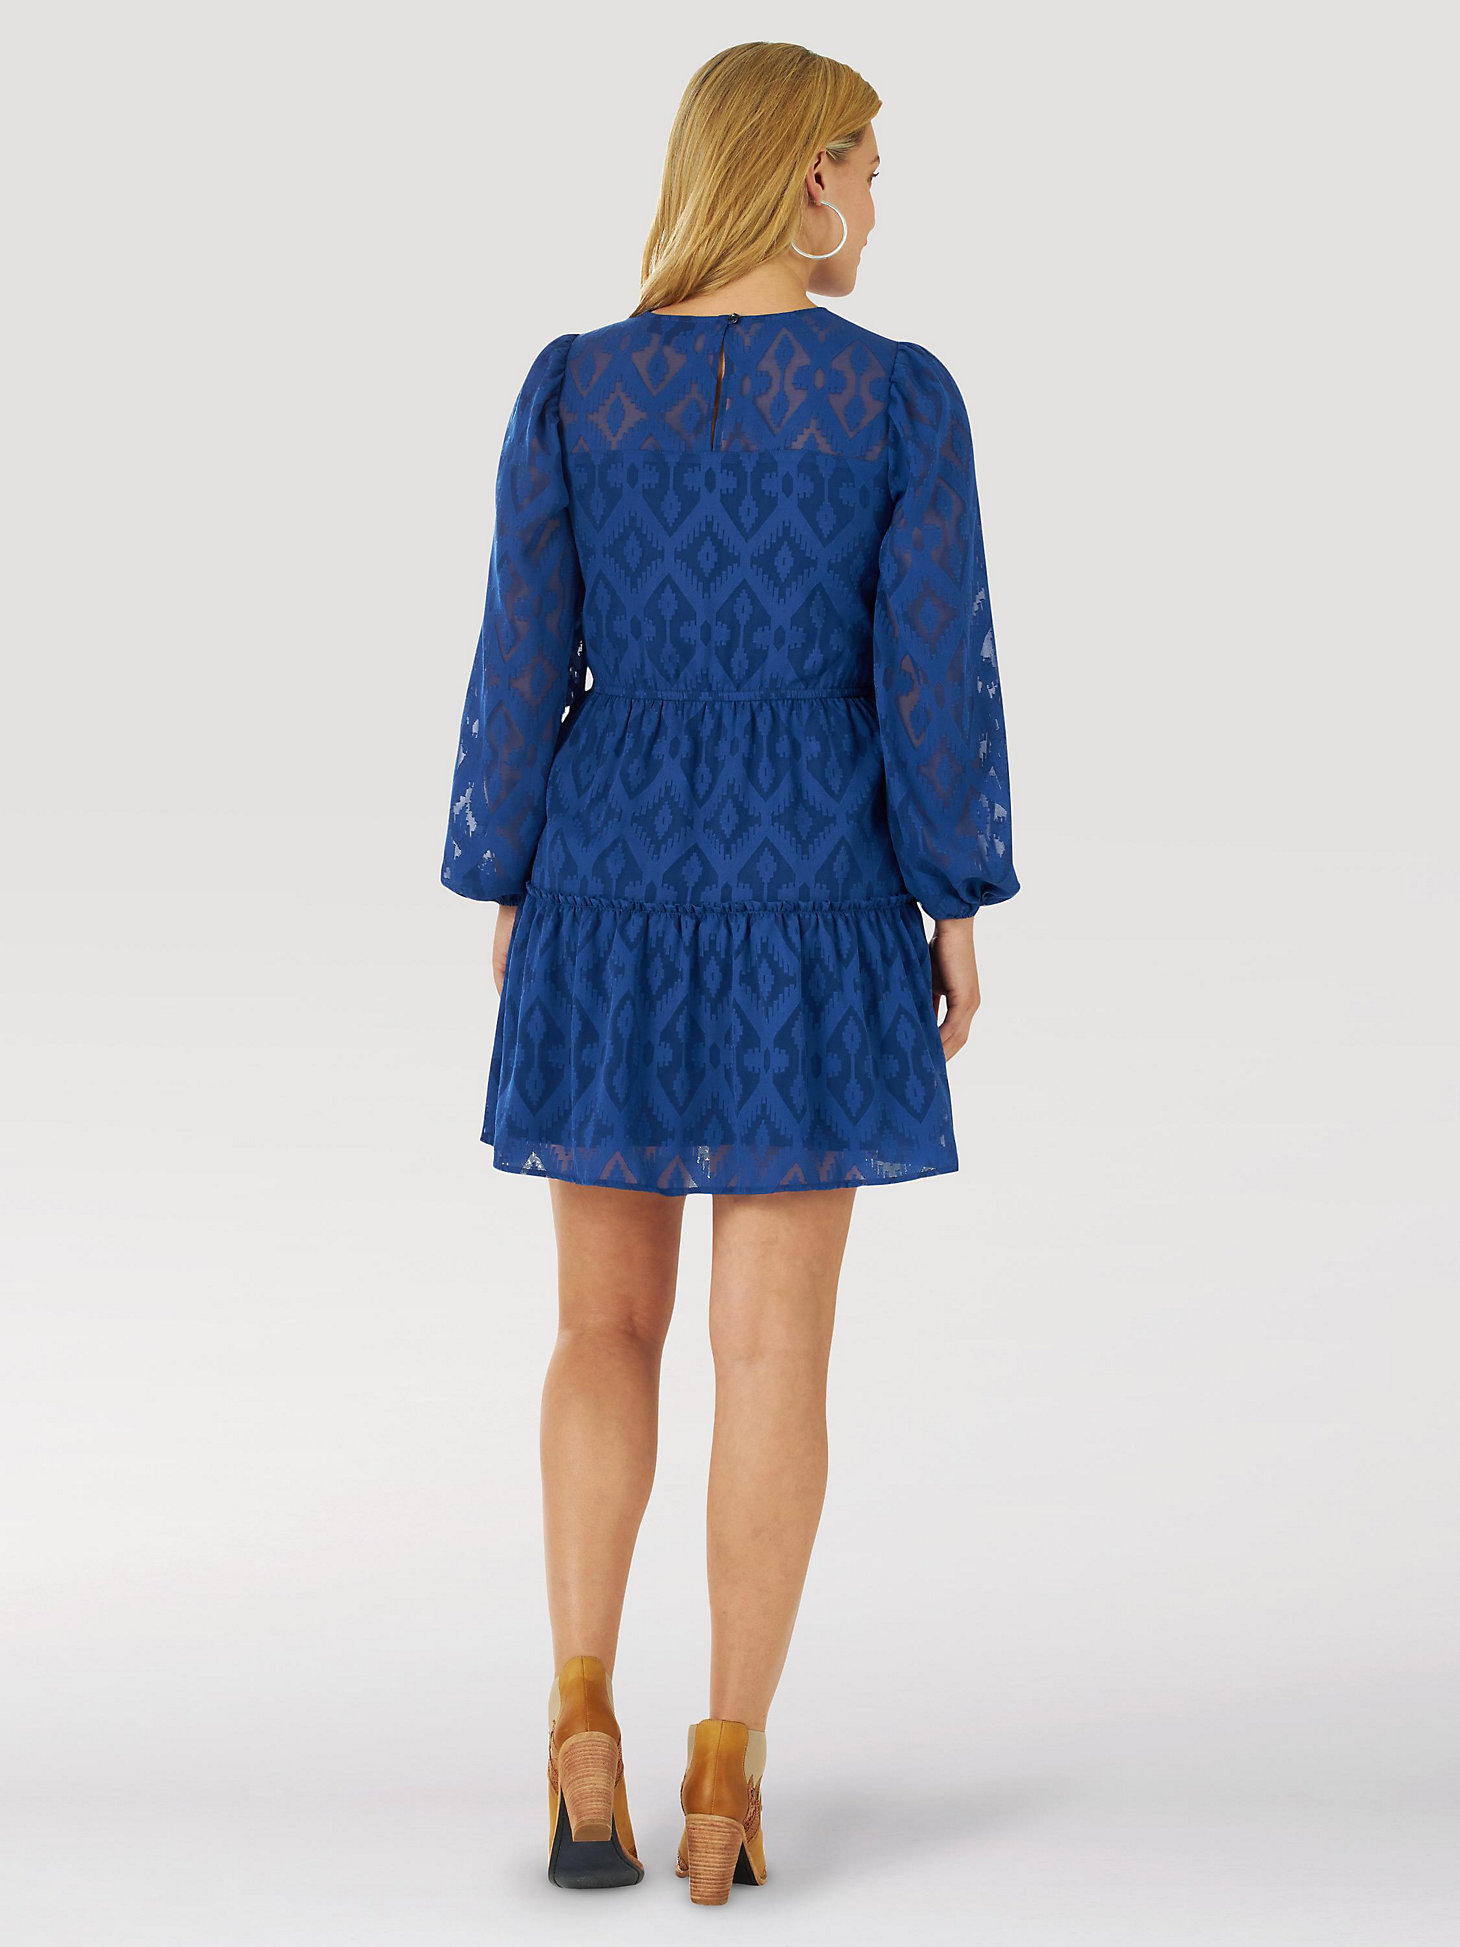 Women's Wrangler Retro® Vintage Tiered Long Sleeve Dress in blue alternative view 1